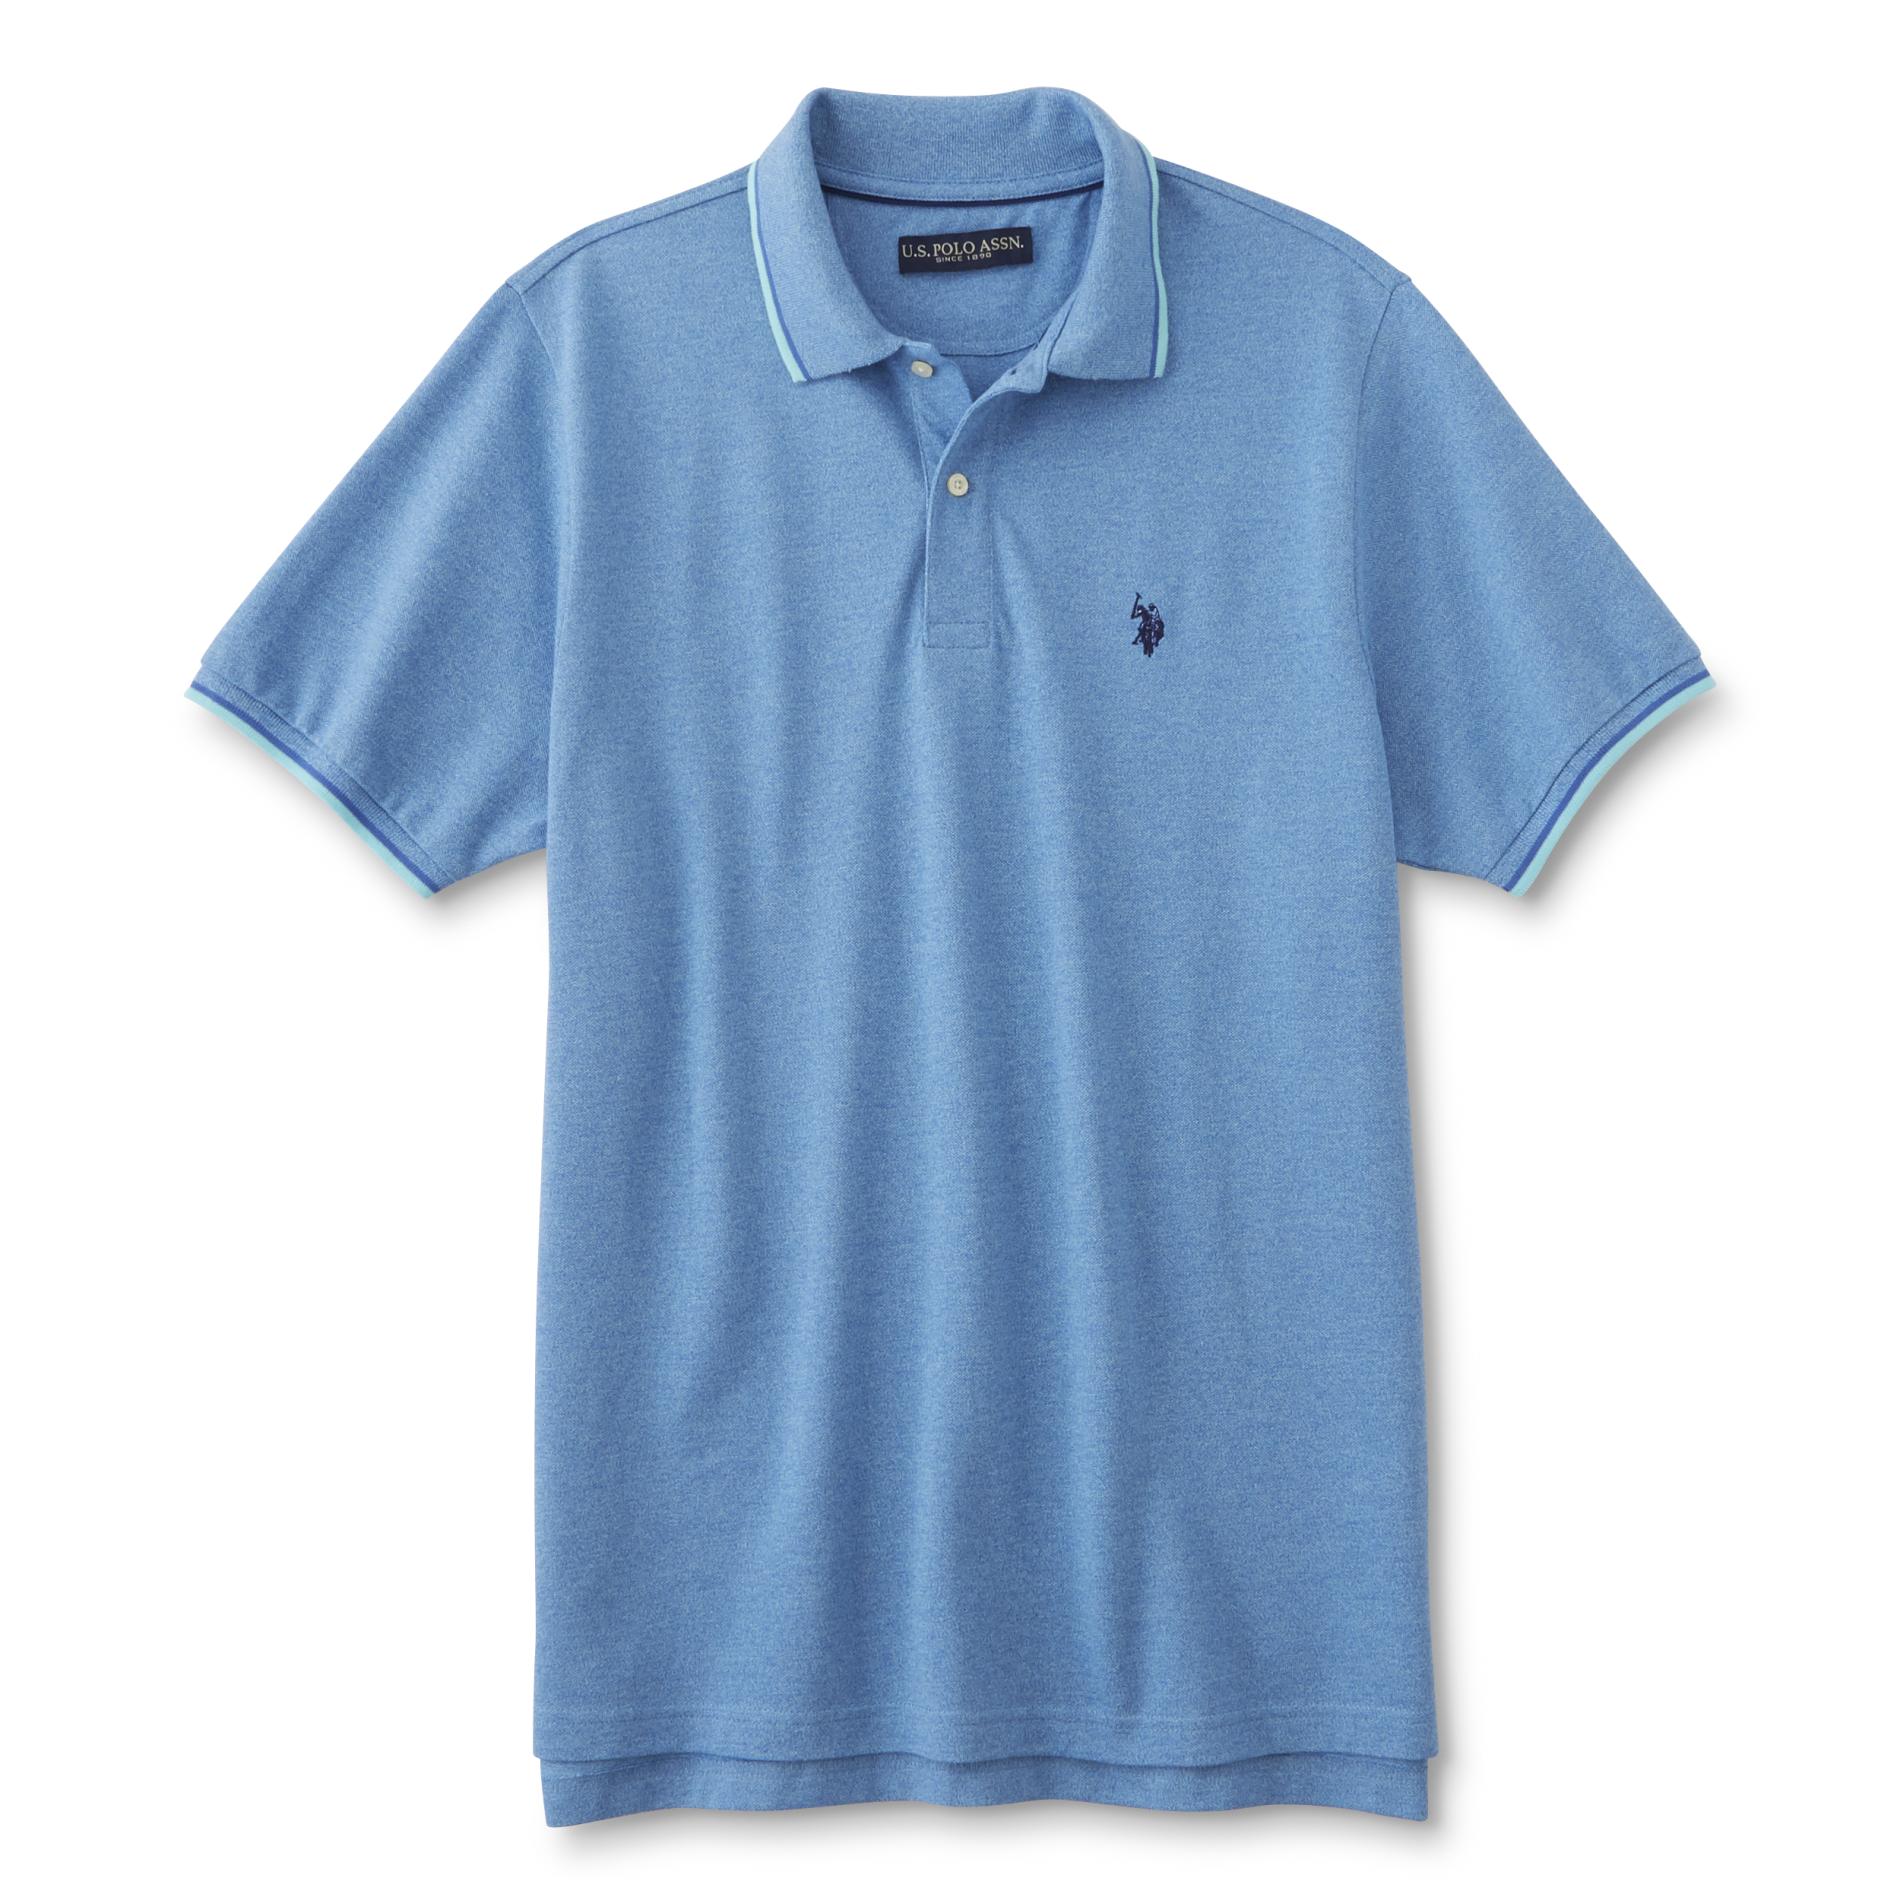 U.S. Polo Assn. Men's Polo Shirt - Marled